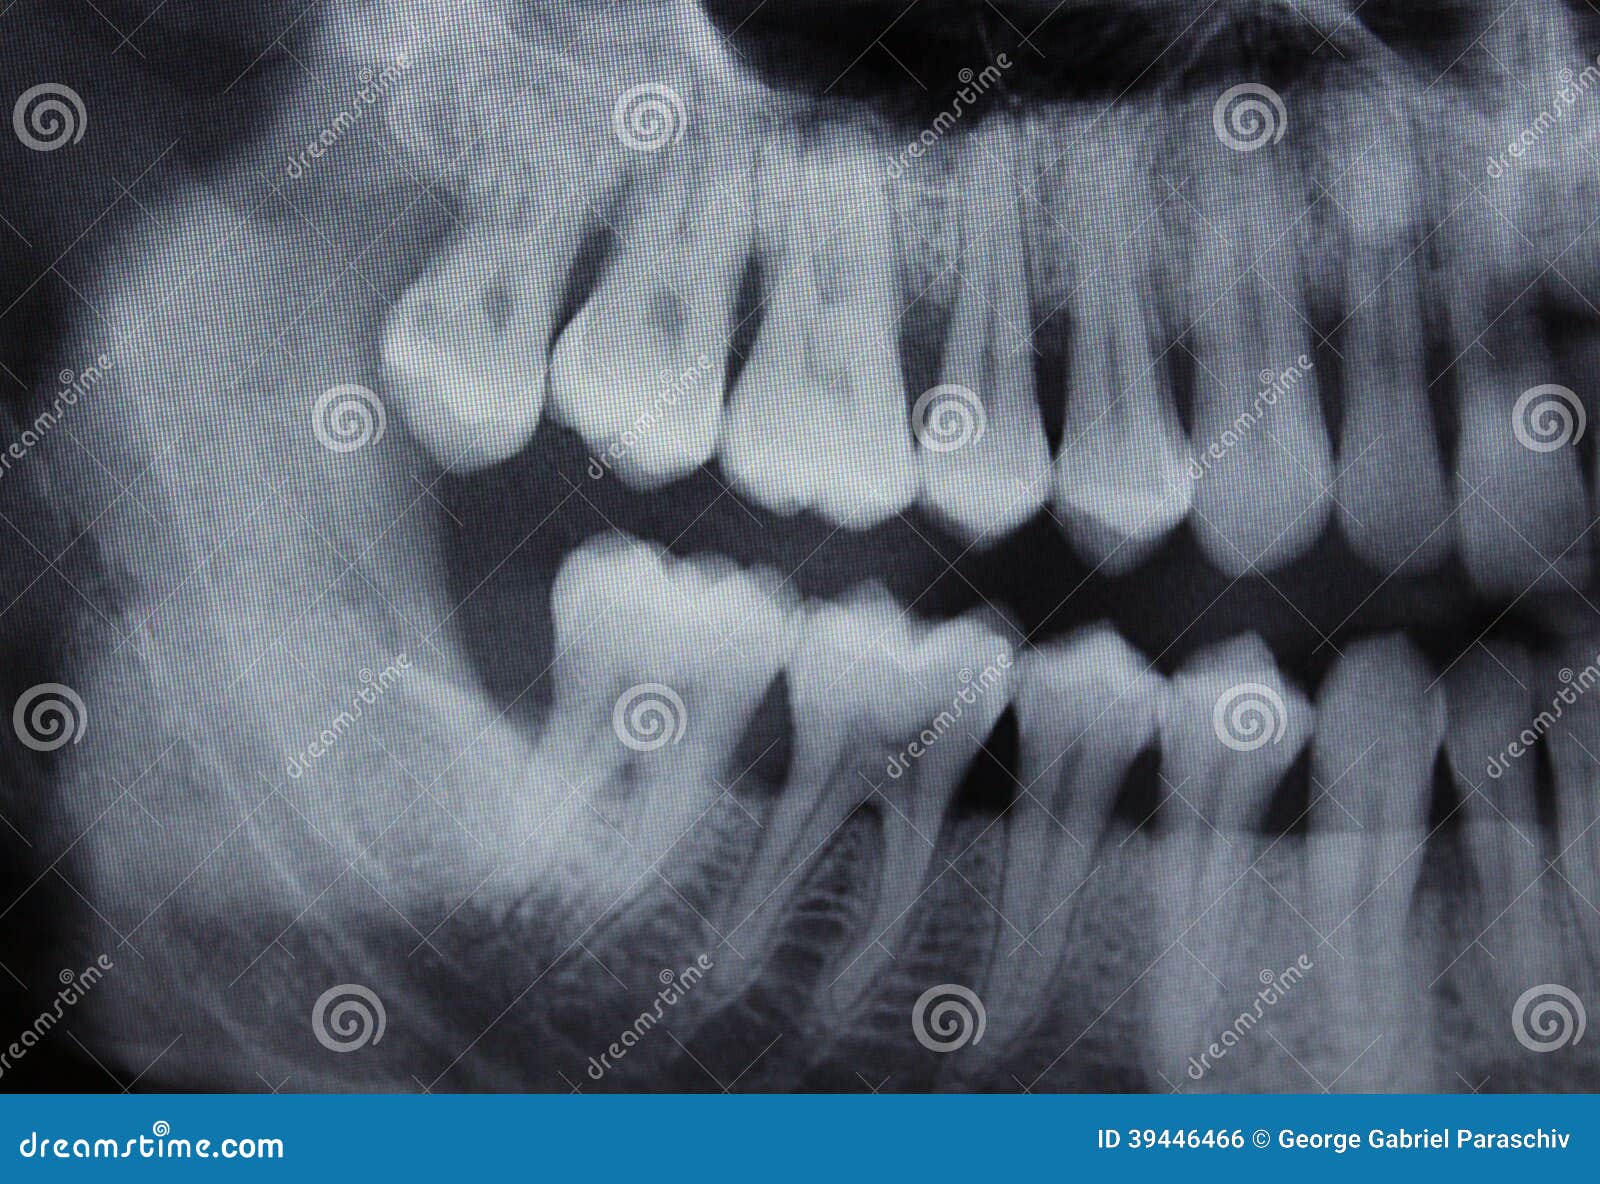 Dental Xray left half stock photo. Image of examine, dental - 39446466